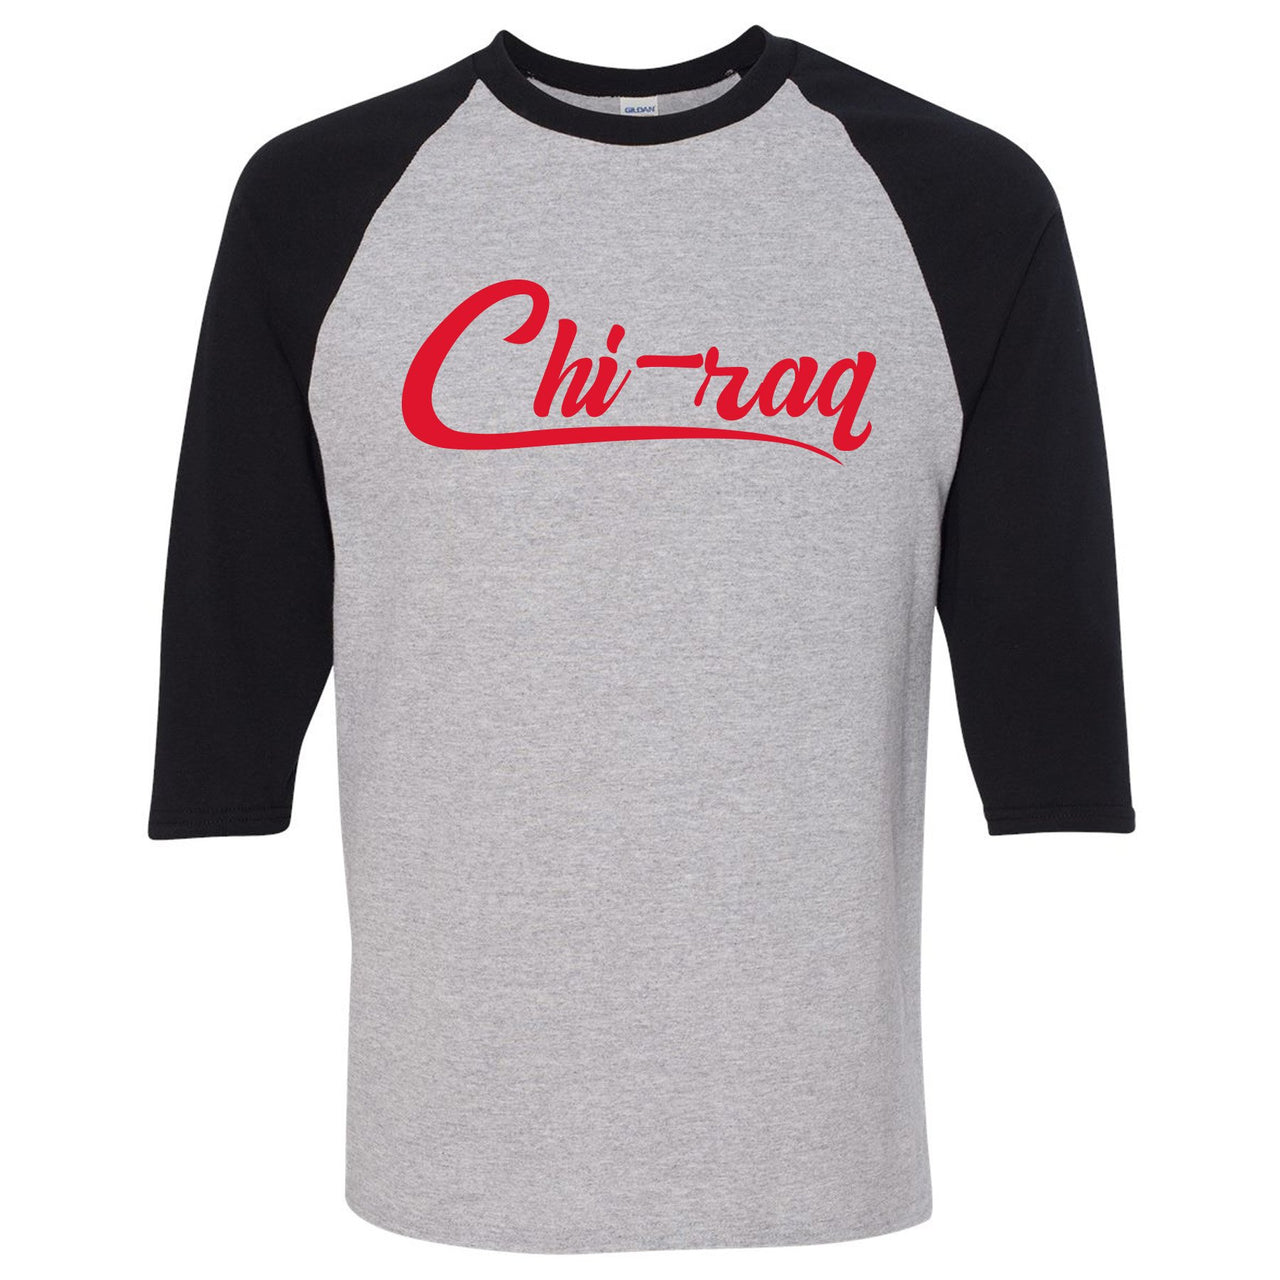 Reflections of a Champion 7s Raglan T Shirt | Chiraq Script, Sports Gray and Black